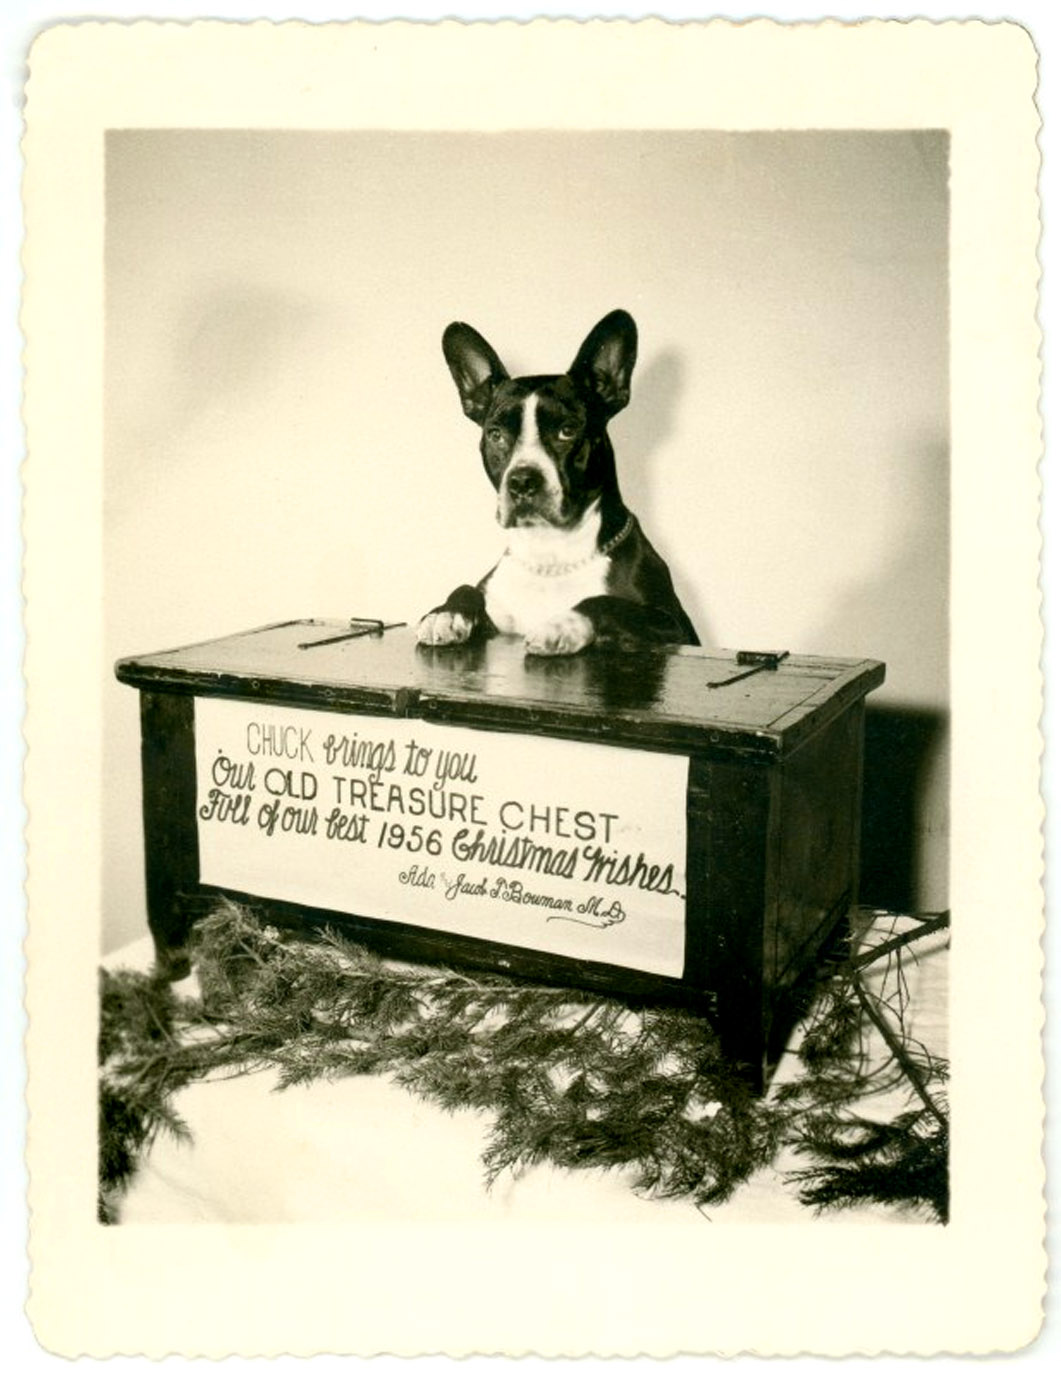 Chuk the dogs treasure chest - fun old  Xmas card